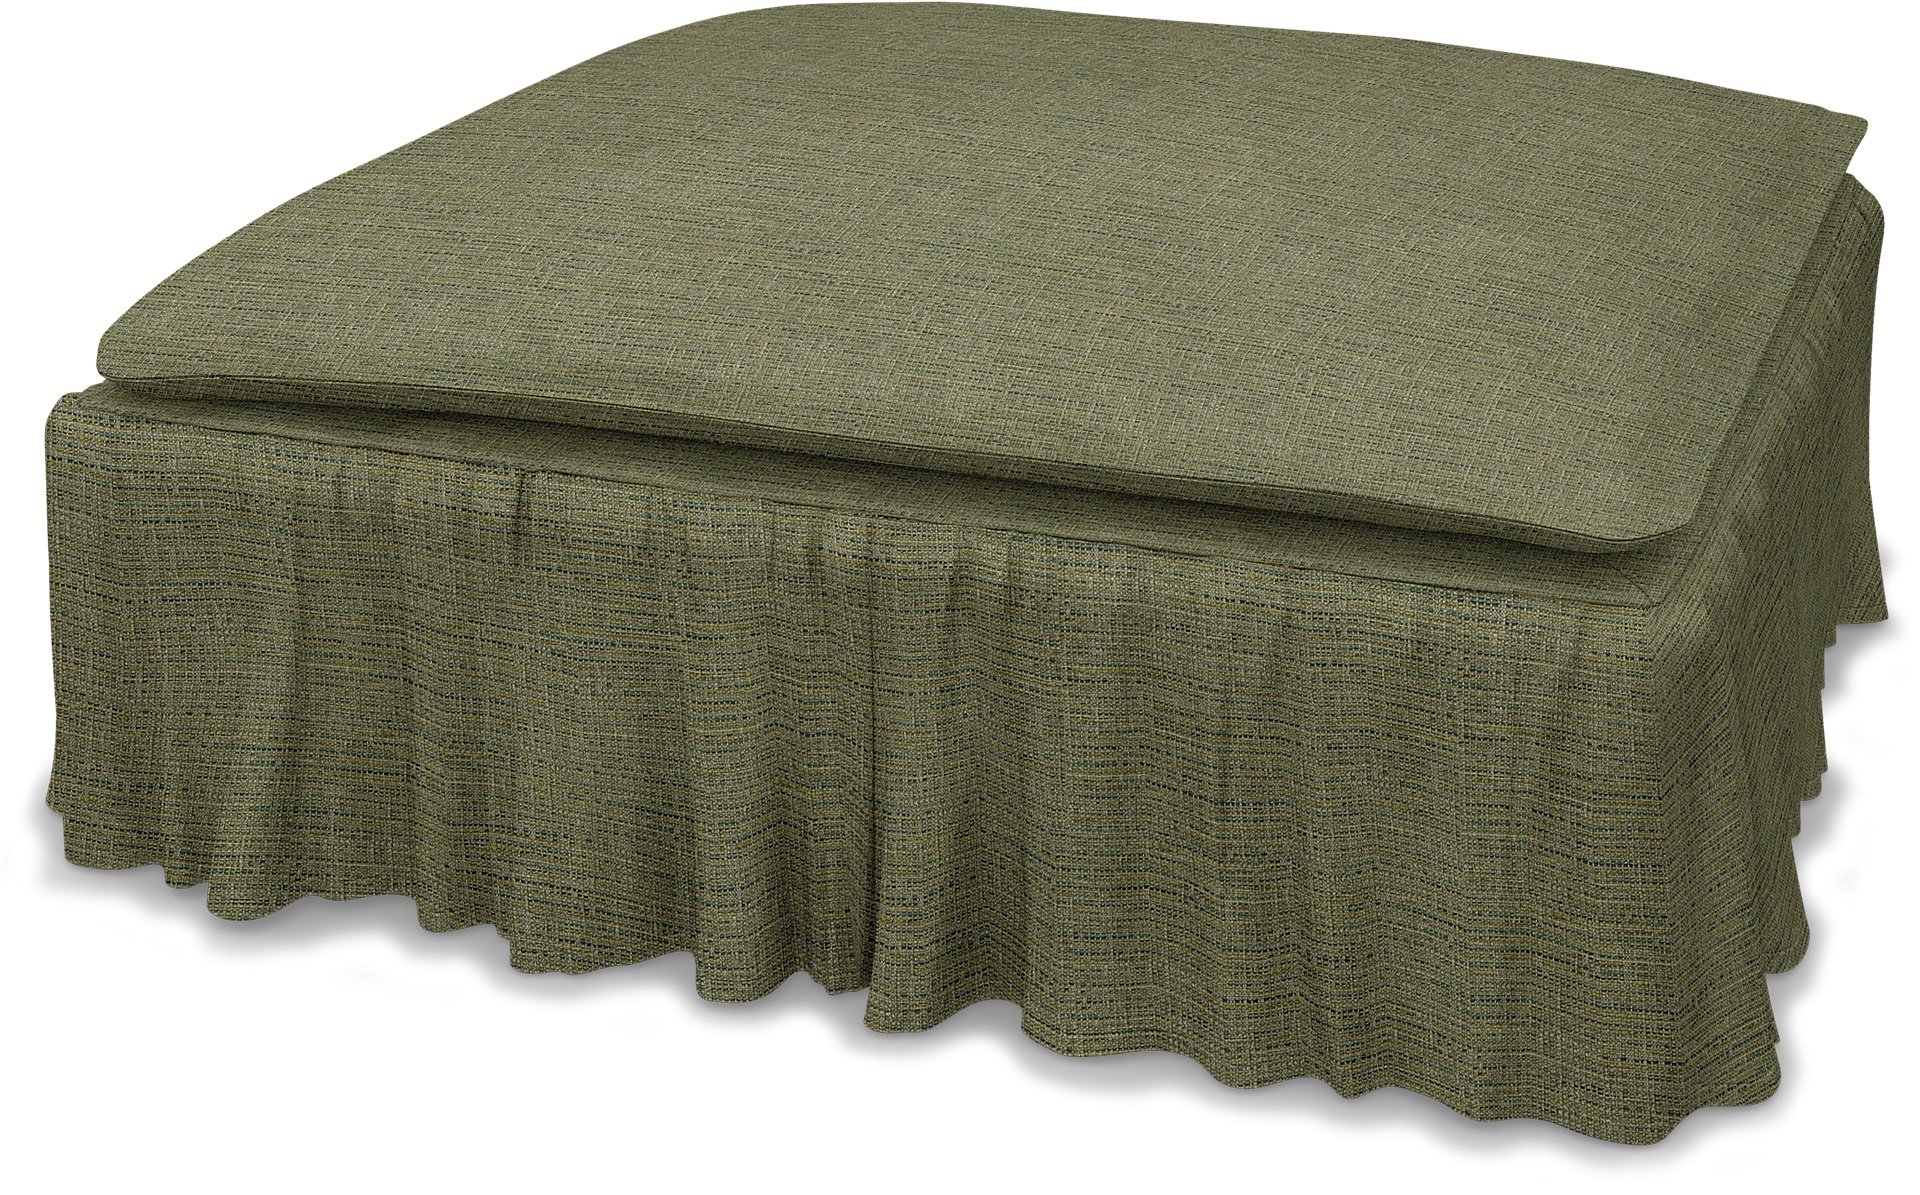 IKEA - Soderhamn Footstool Cover, Meadow Green, Boucle & Texture - Bemz